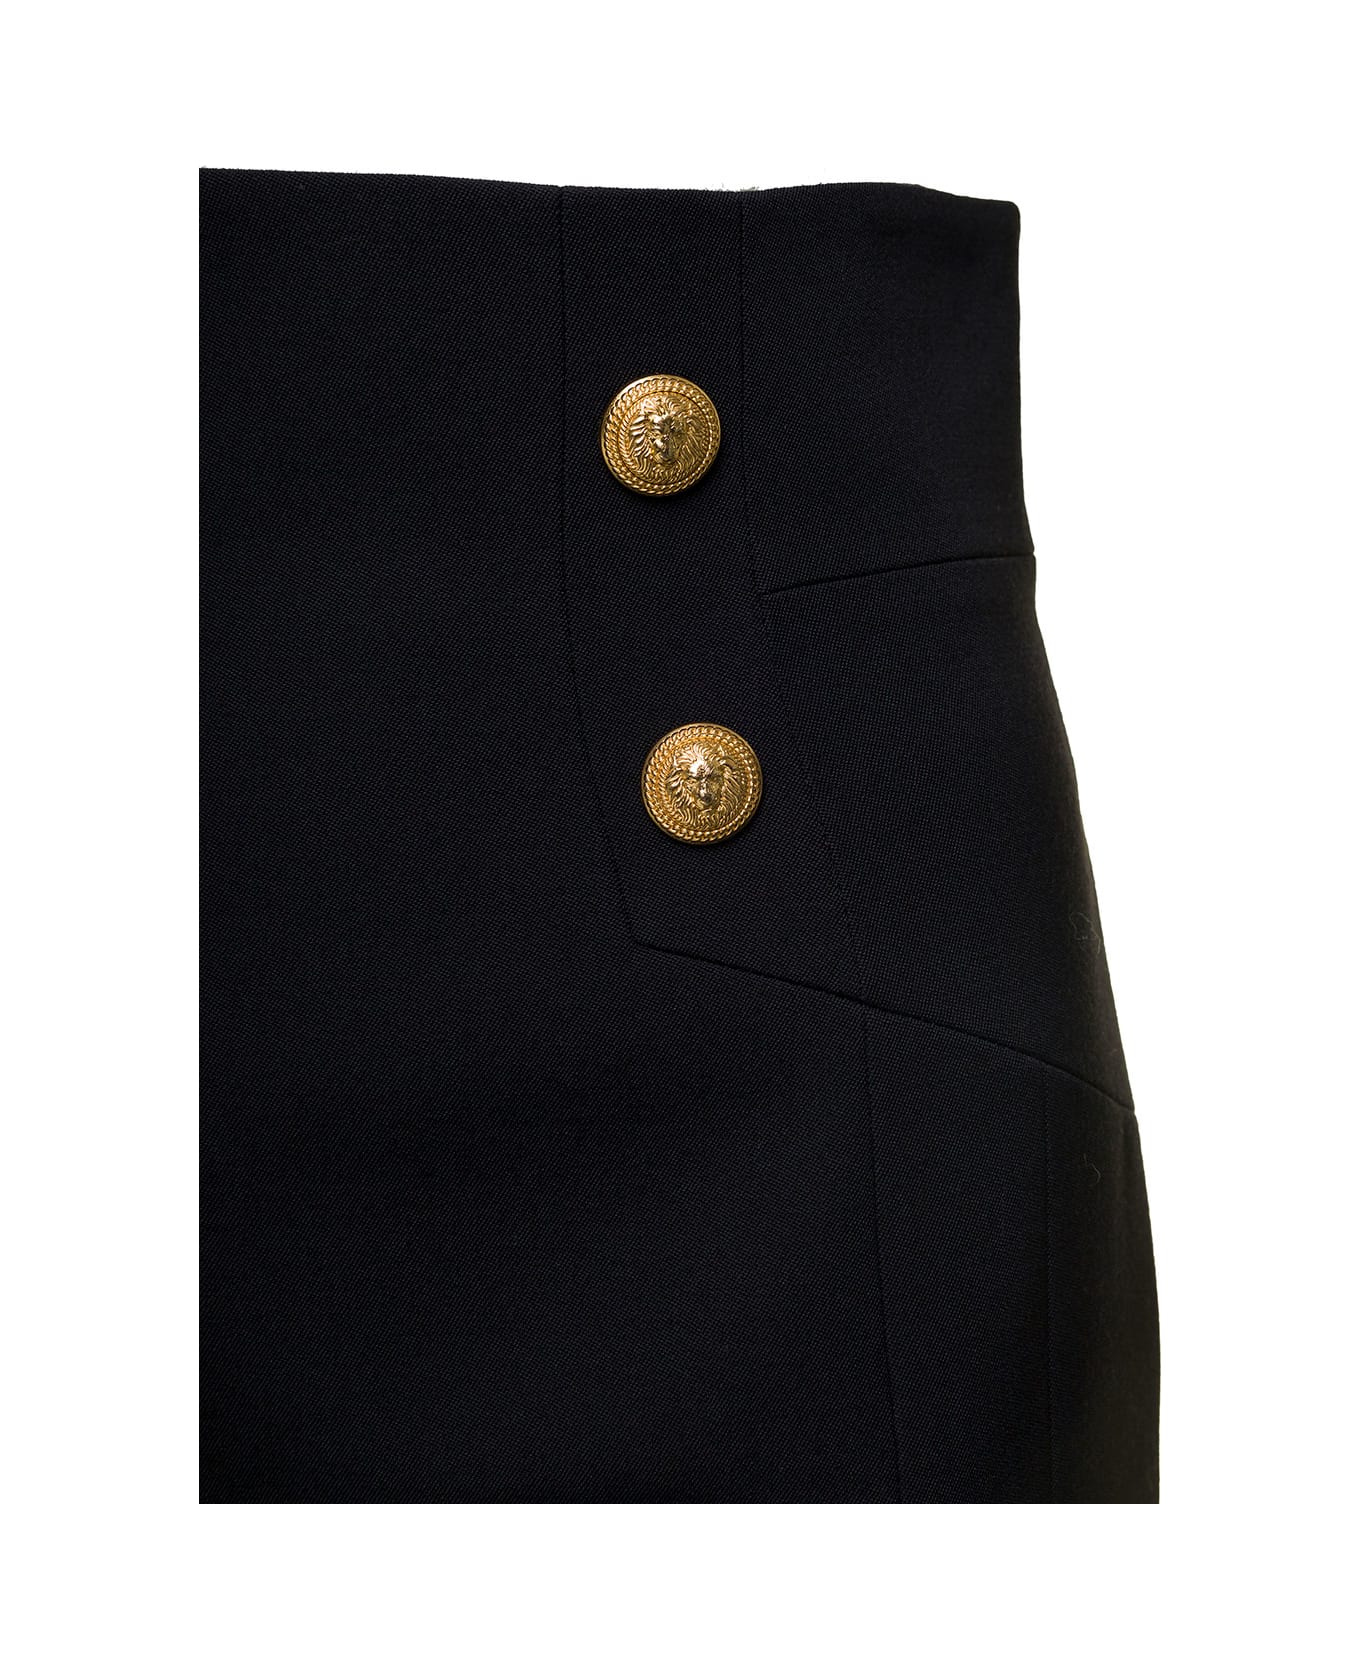 Balmain Black Mini-skirt With Jewel Buttons In Wool Woman - Black